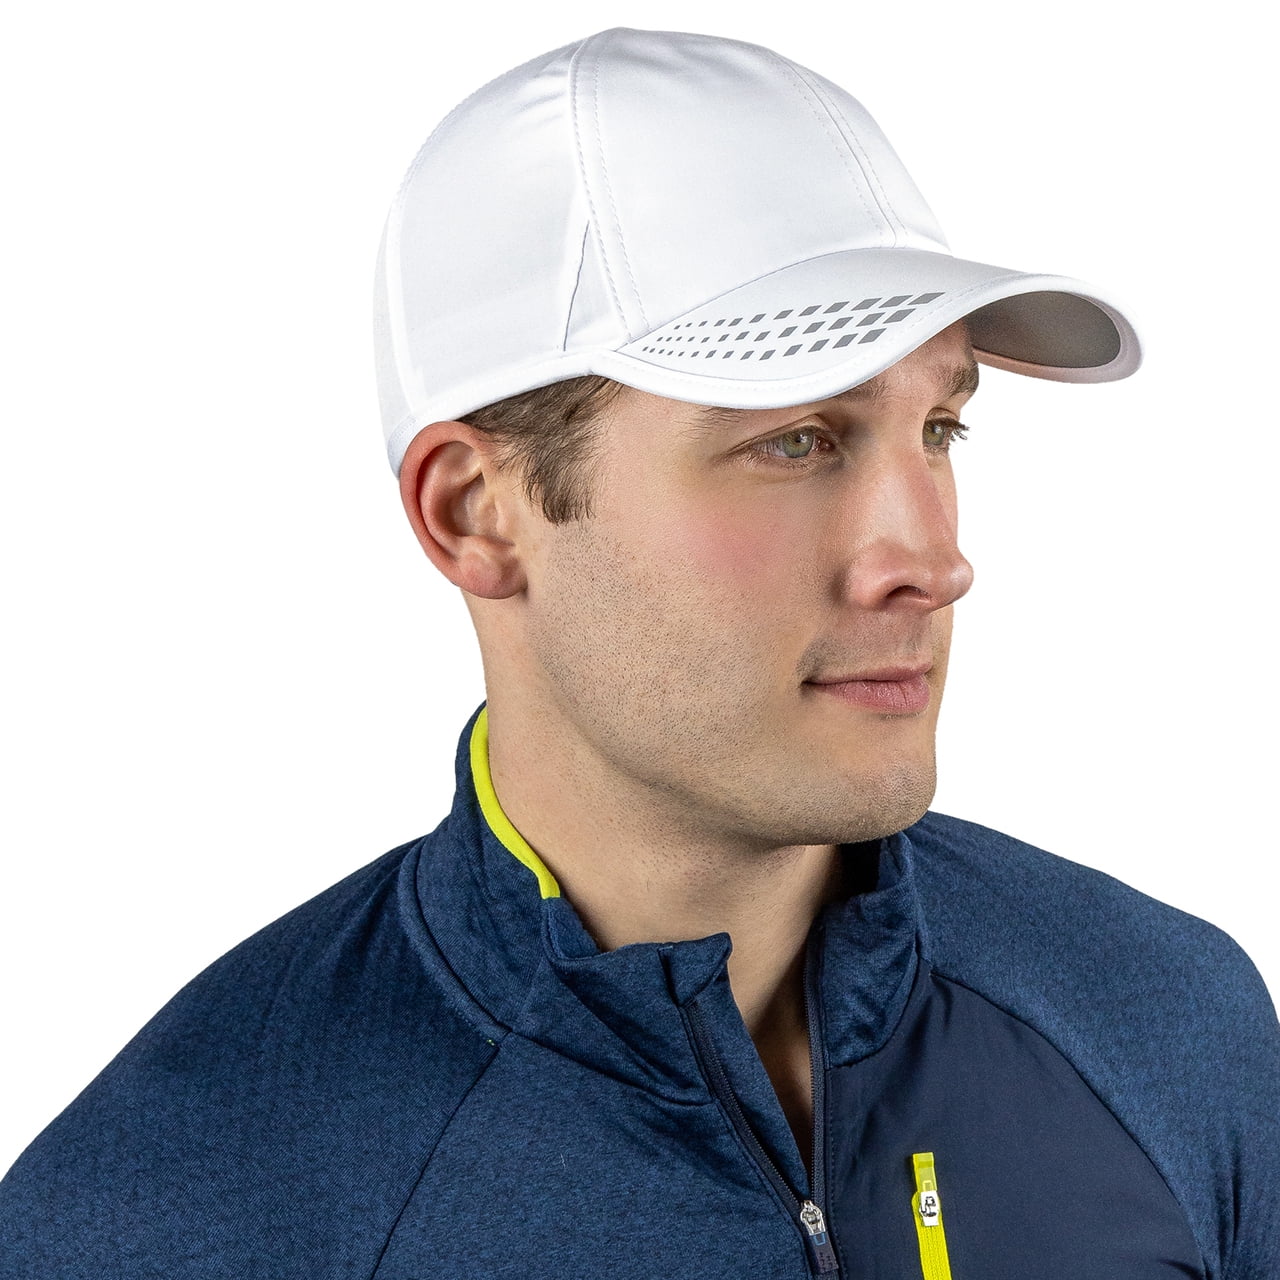 Men’s UV Protection Running Hat - white/reflective